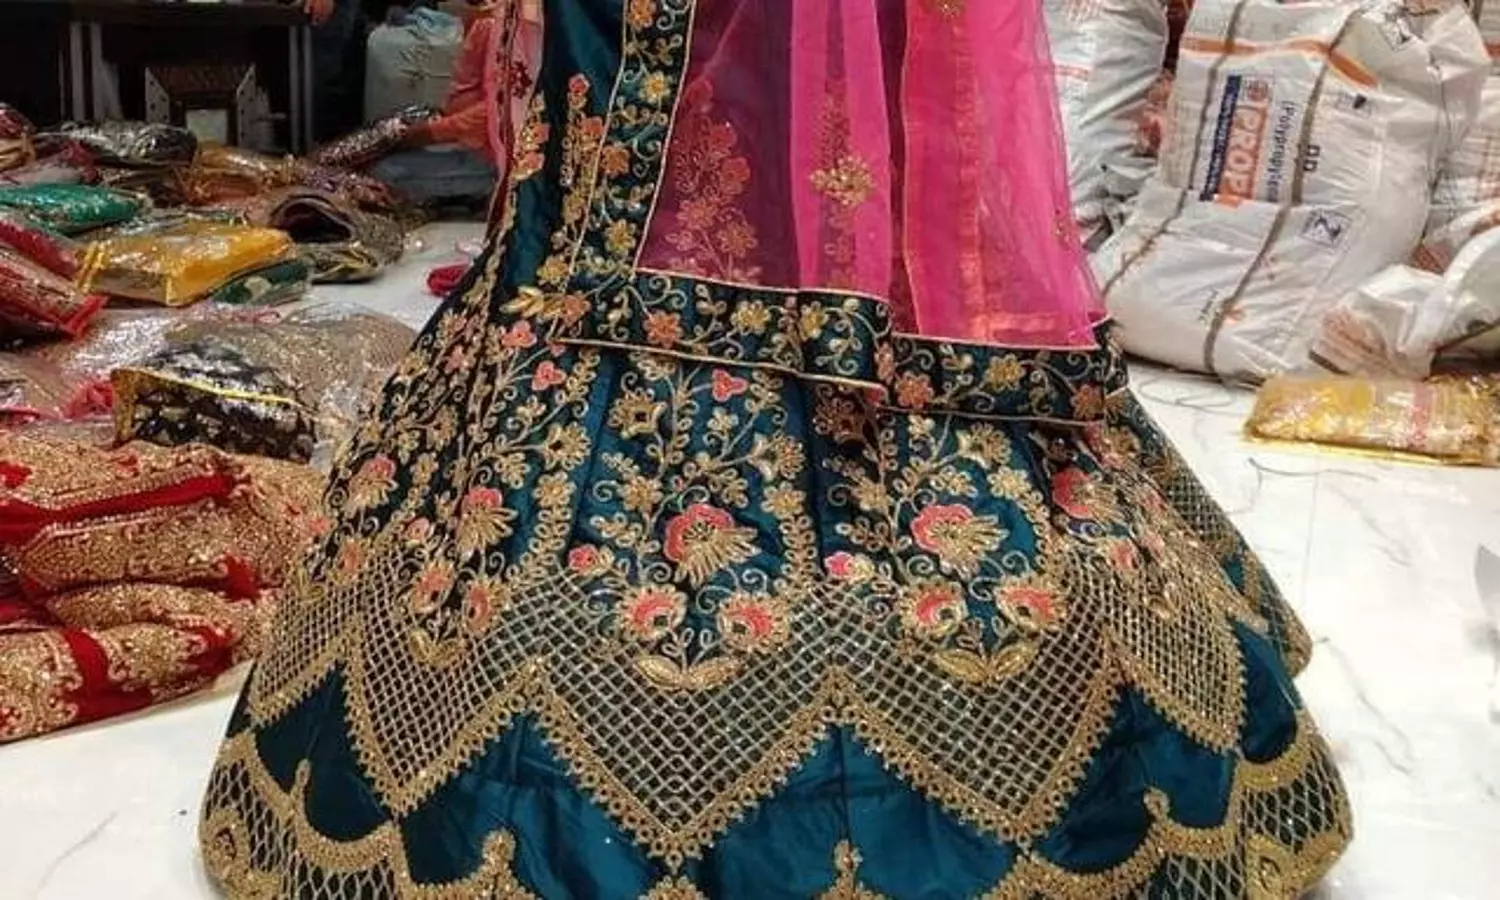 Kanpur Wedding Dress Markets